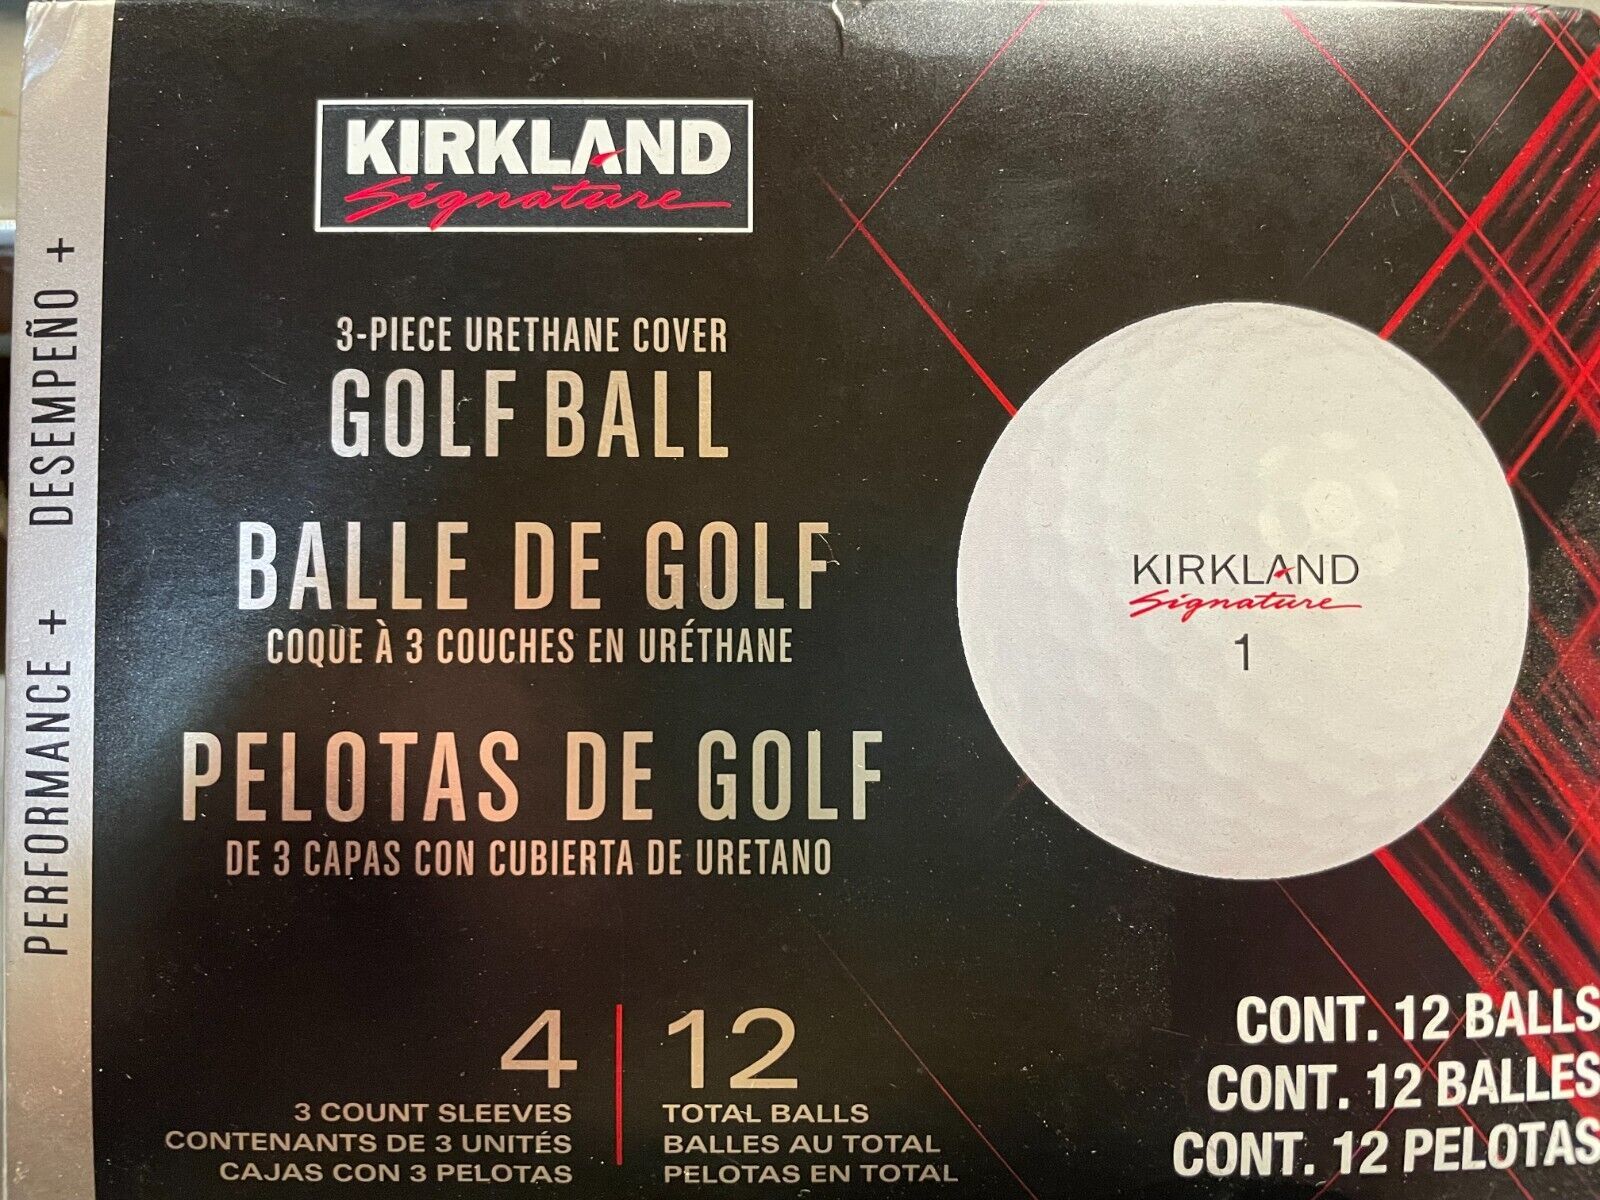 Primary image for Kirkland Signature Golf Balls 3-Piece Urethane Cover 12 Total